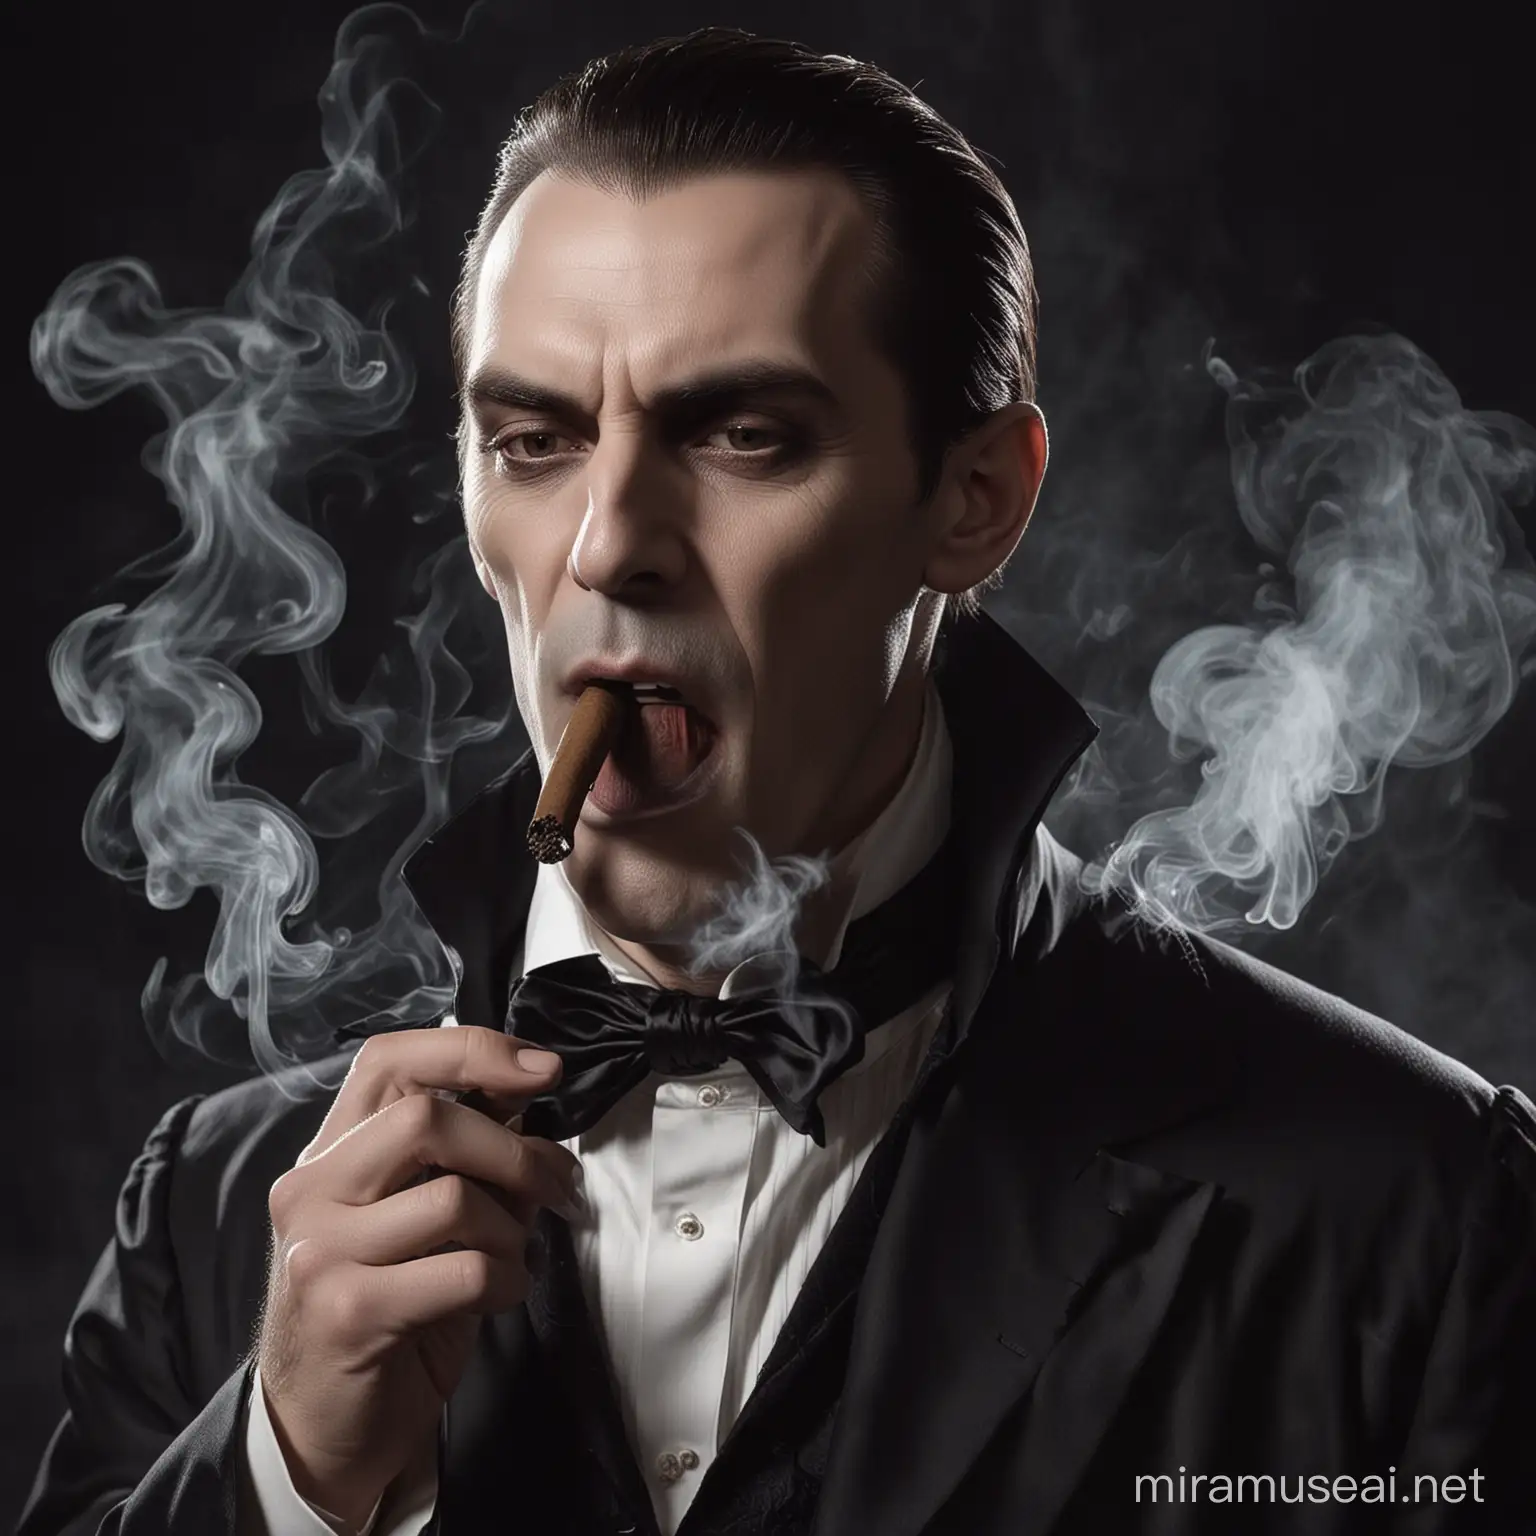 vampire smoking cigar